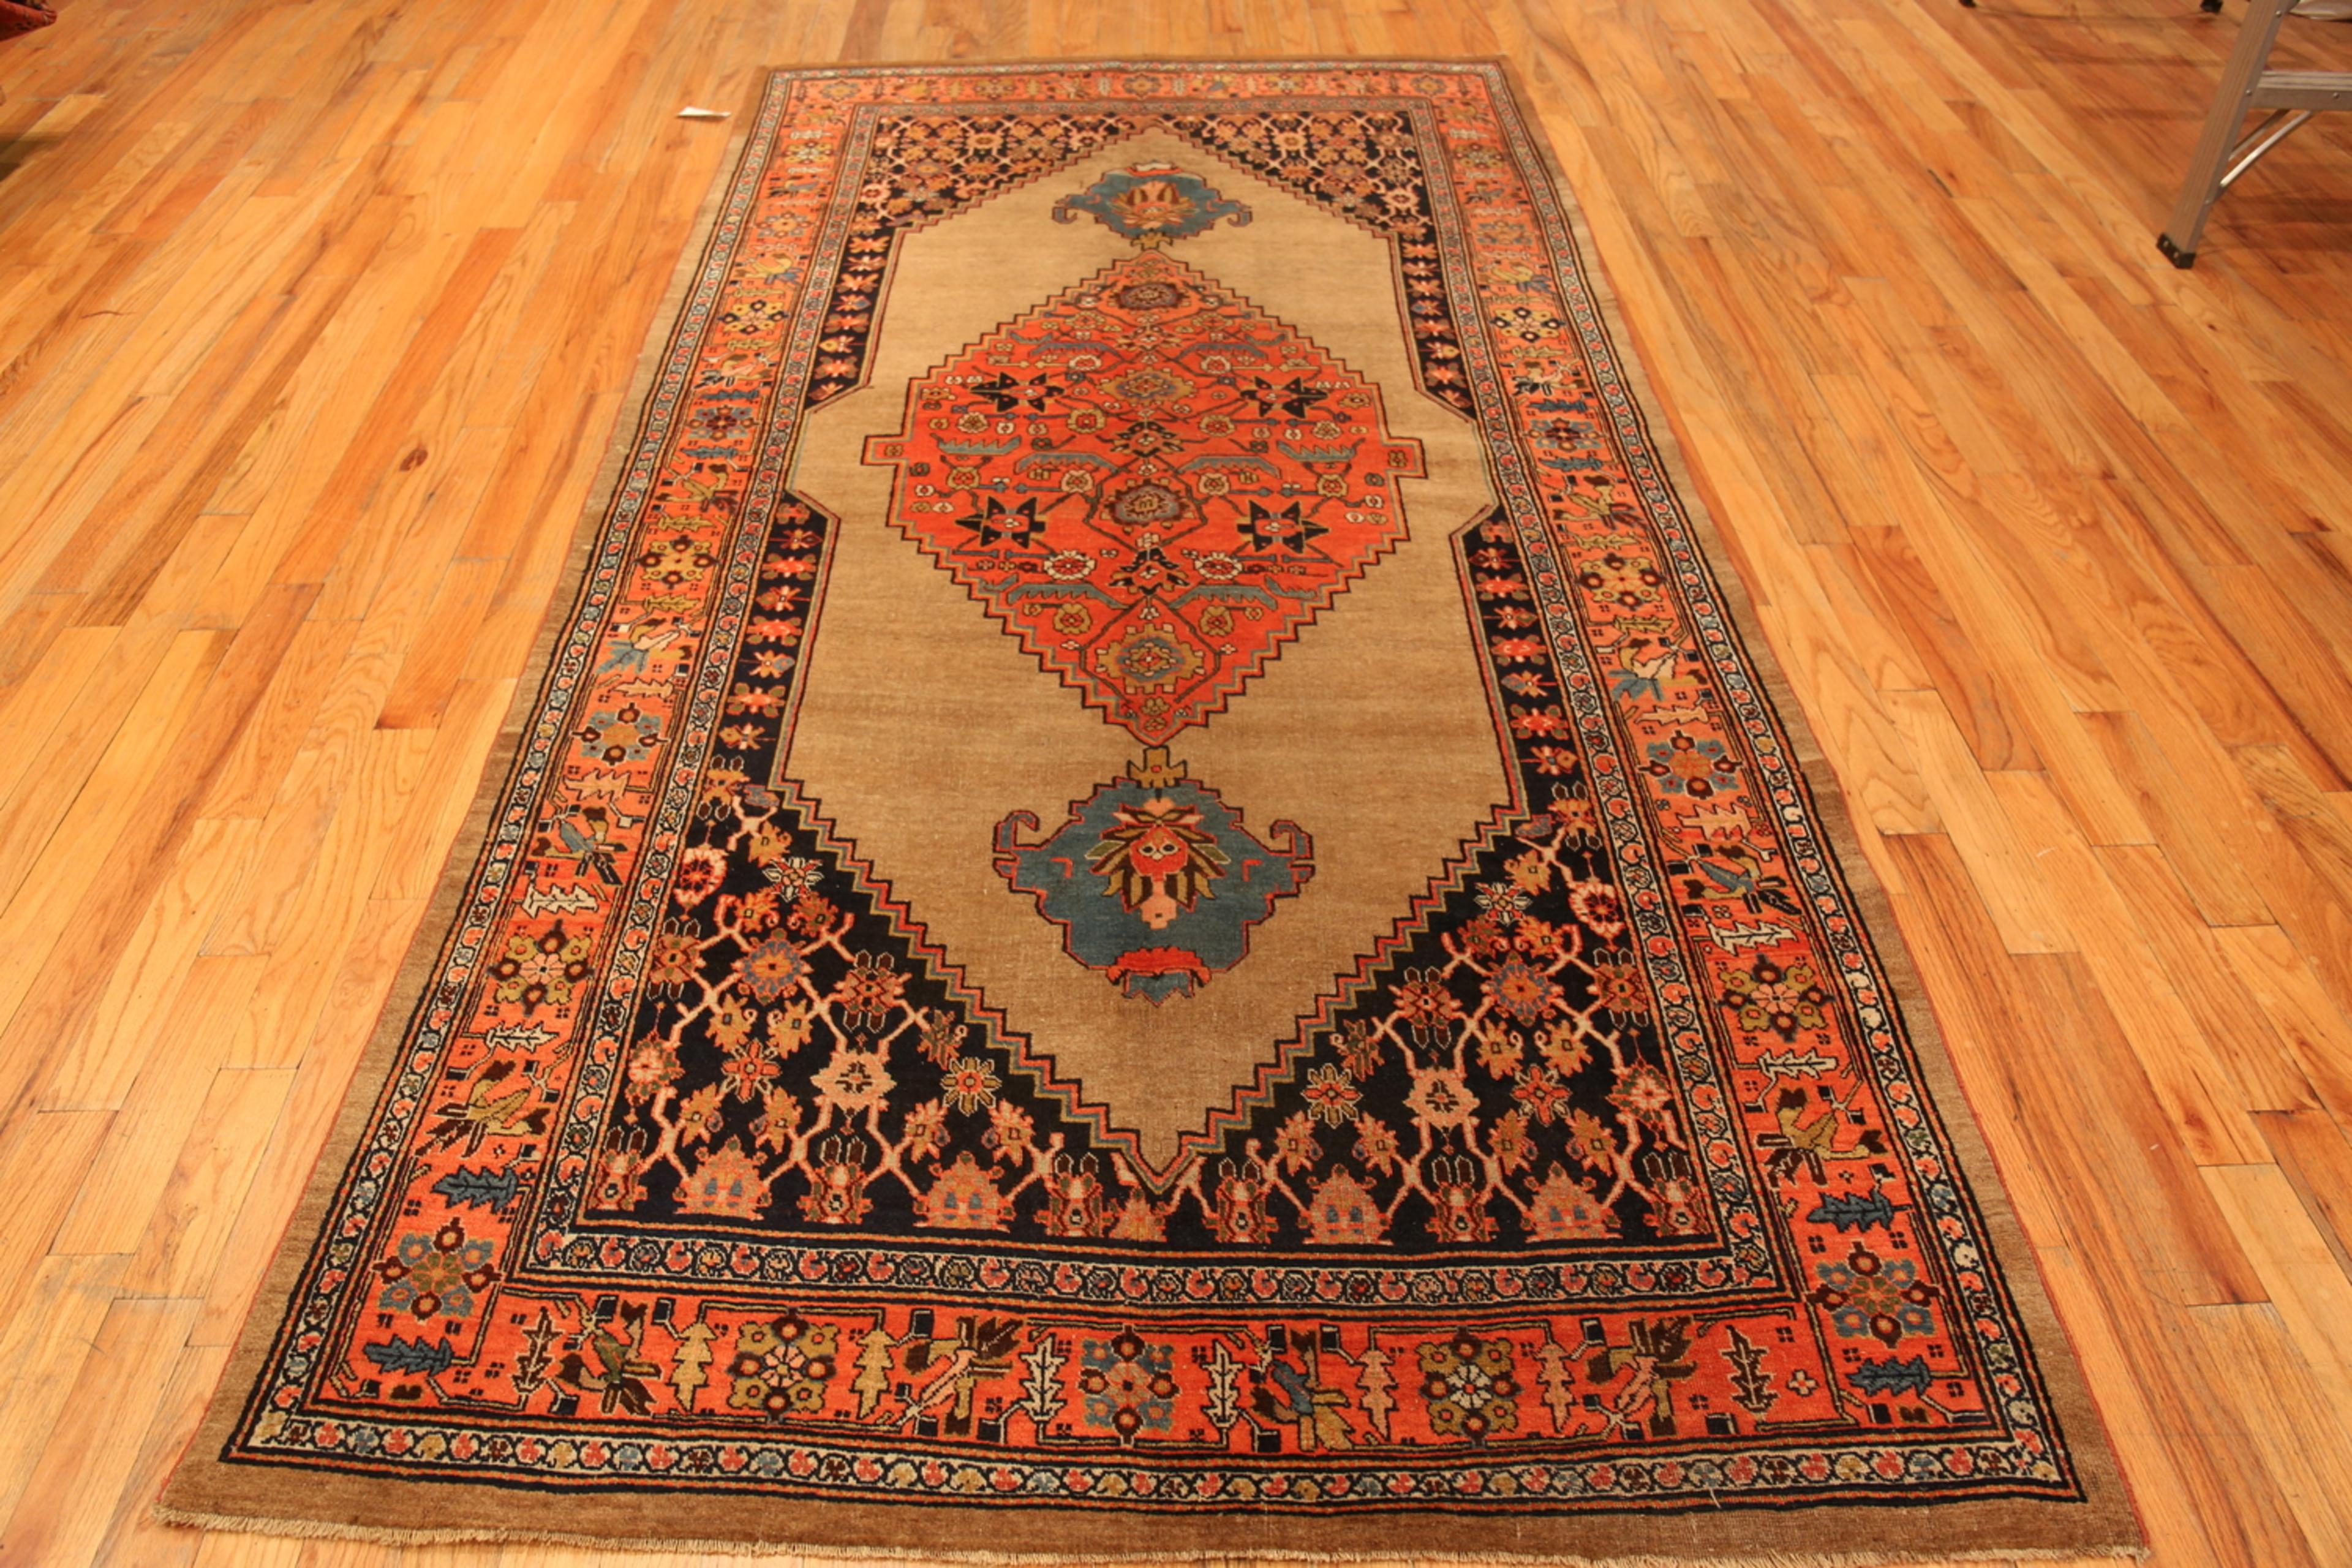 Beautiful Antique Persian Bidjar Rug, Country of Origin: Antique Persian Rugs, Circa Date: 1900